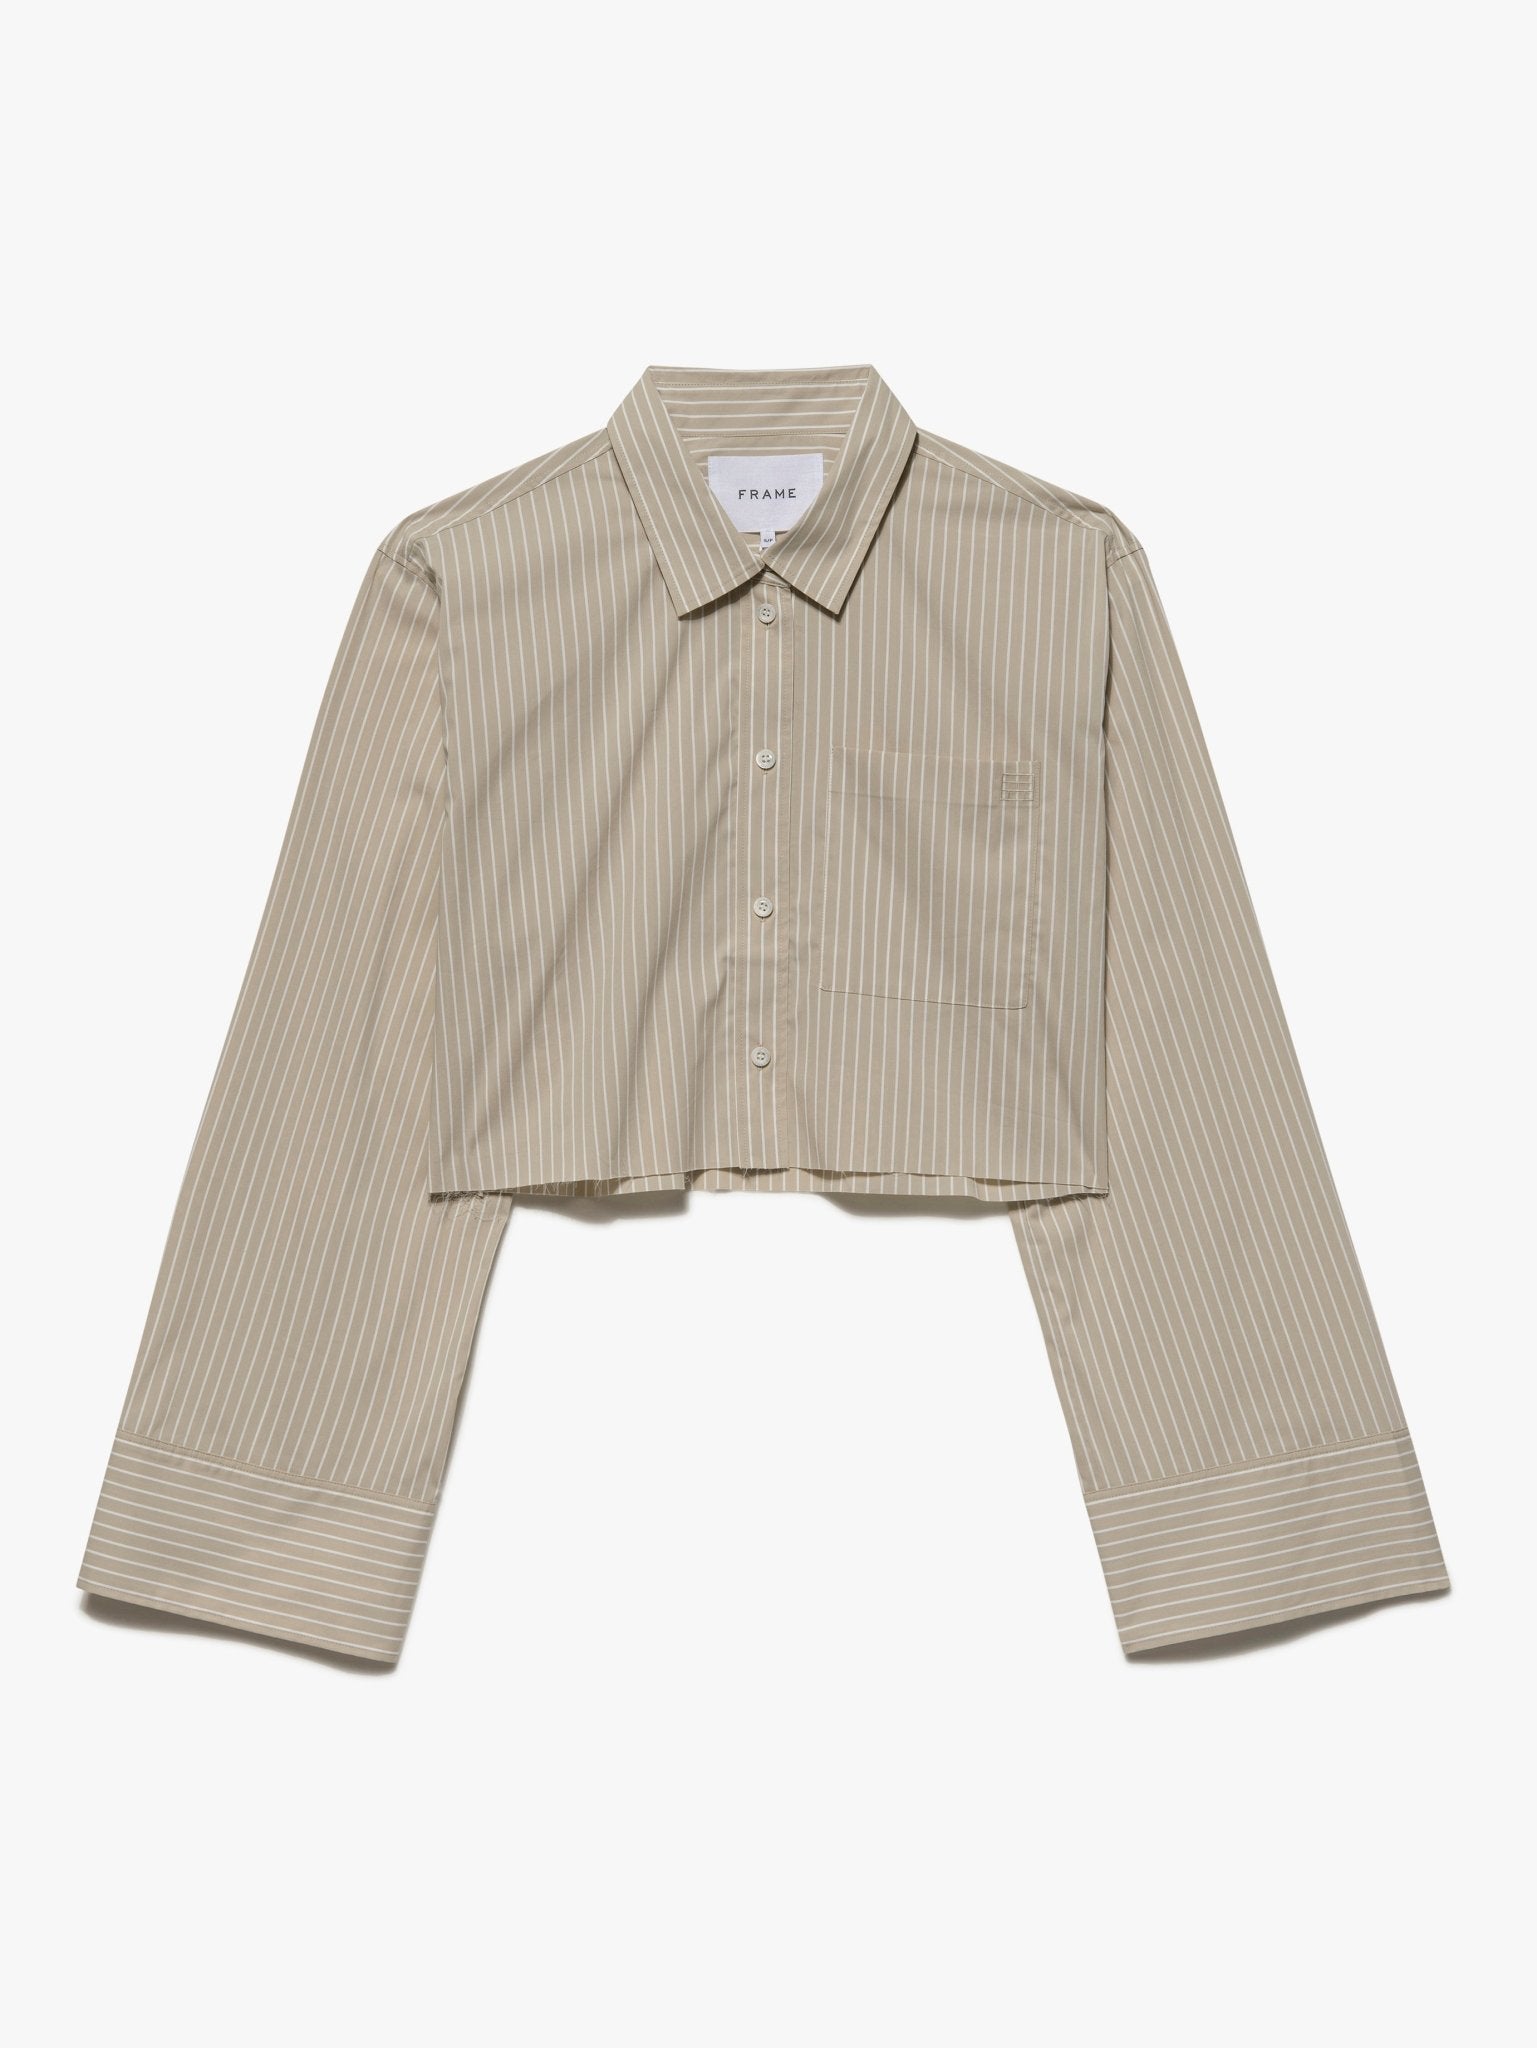 Frame Cropped Wide Sleeve Shirt in Sand Multi - Estilo Boutique